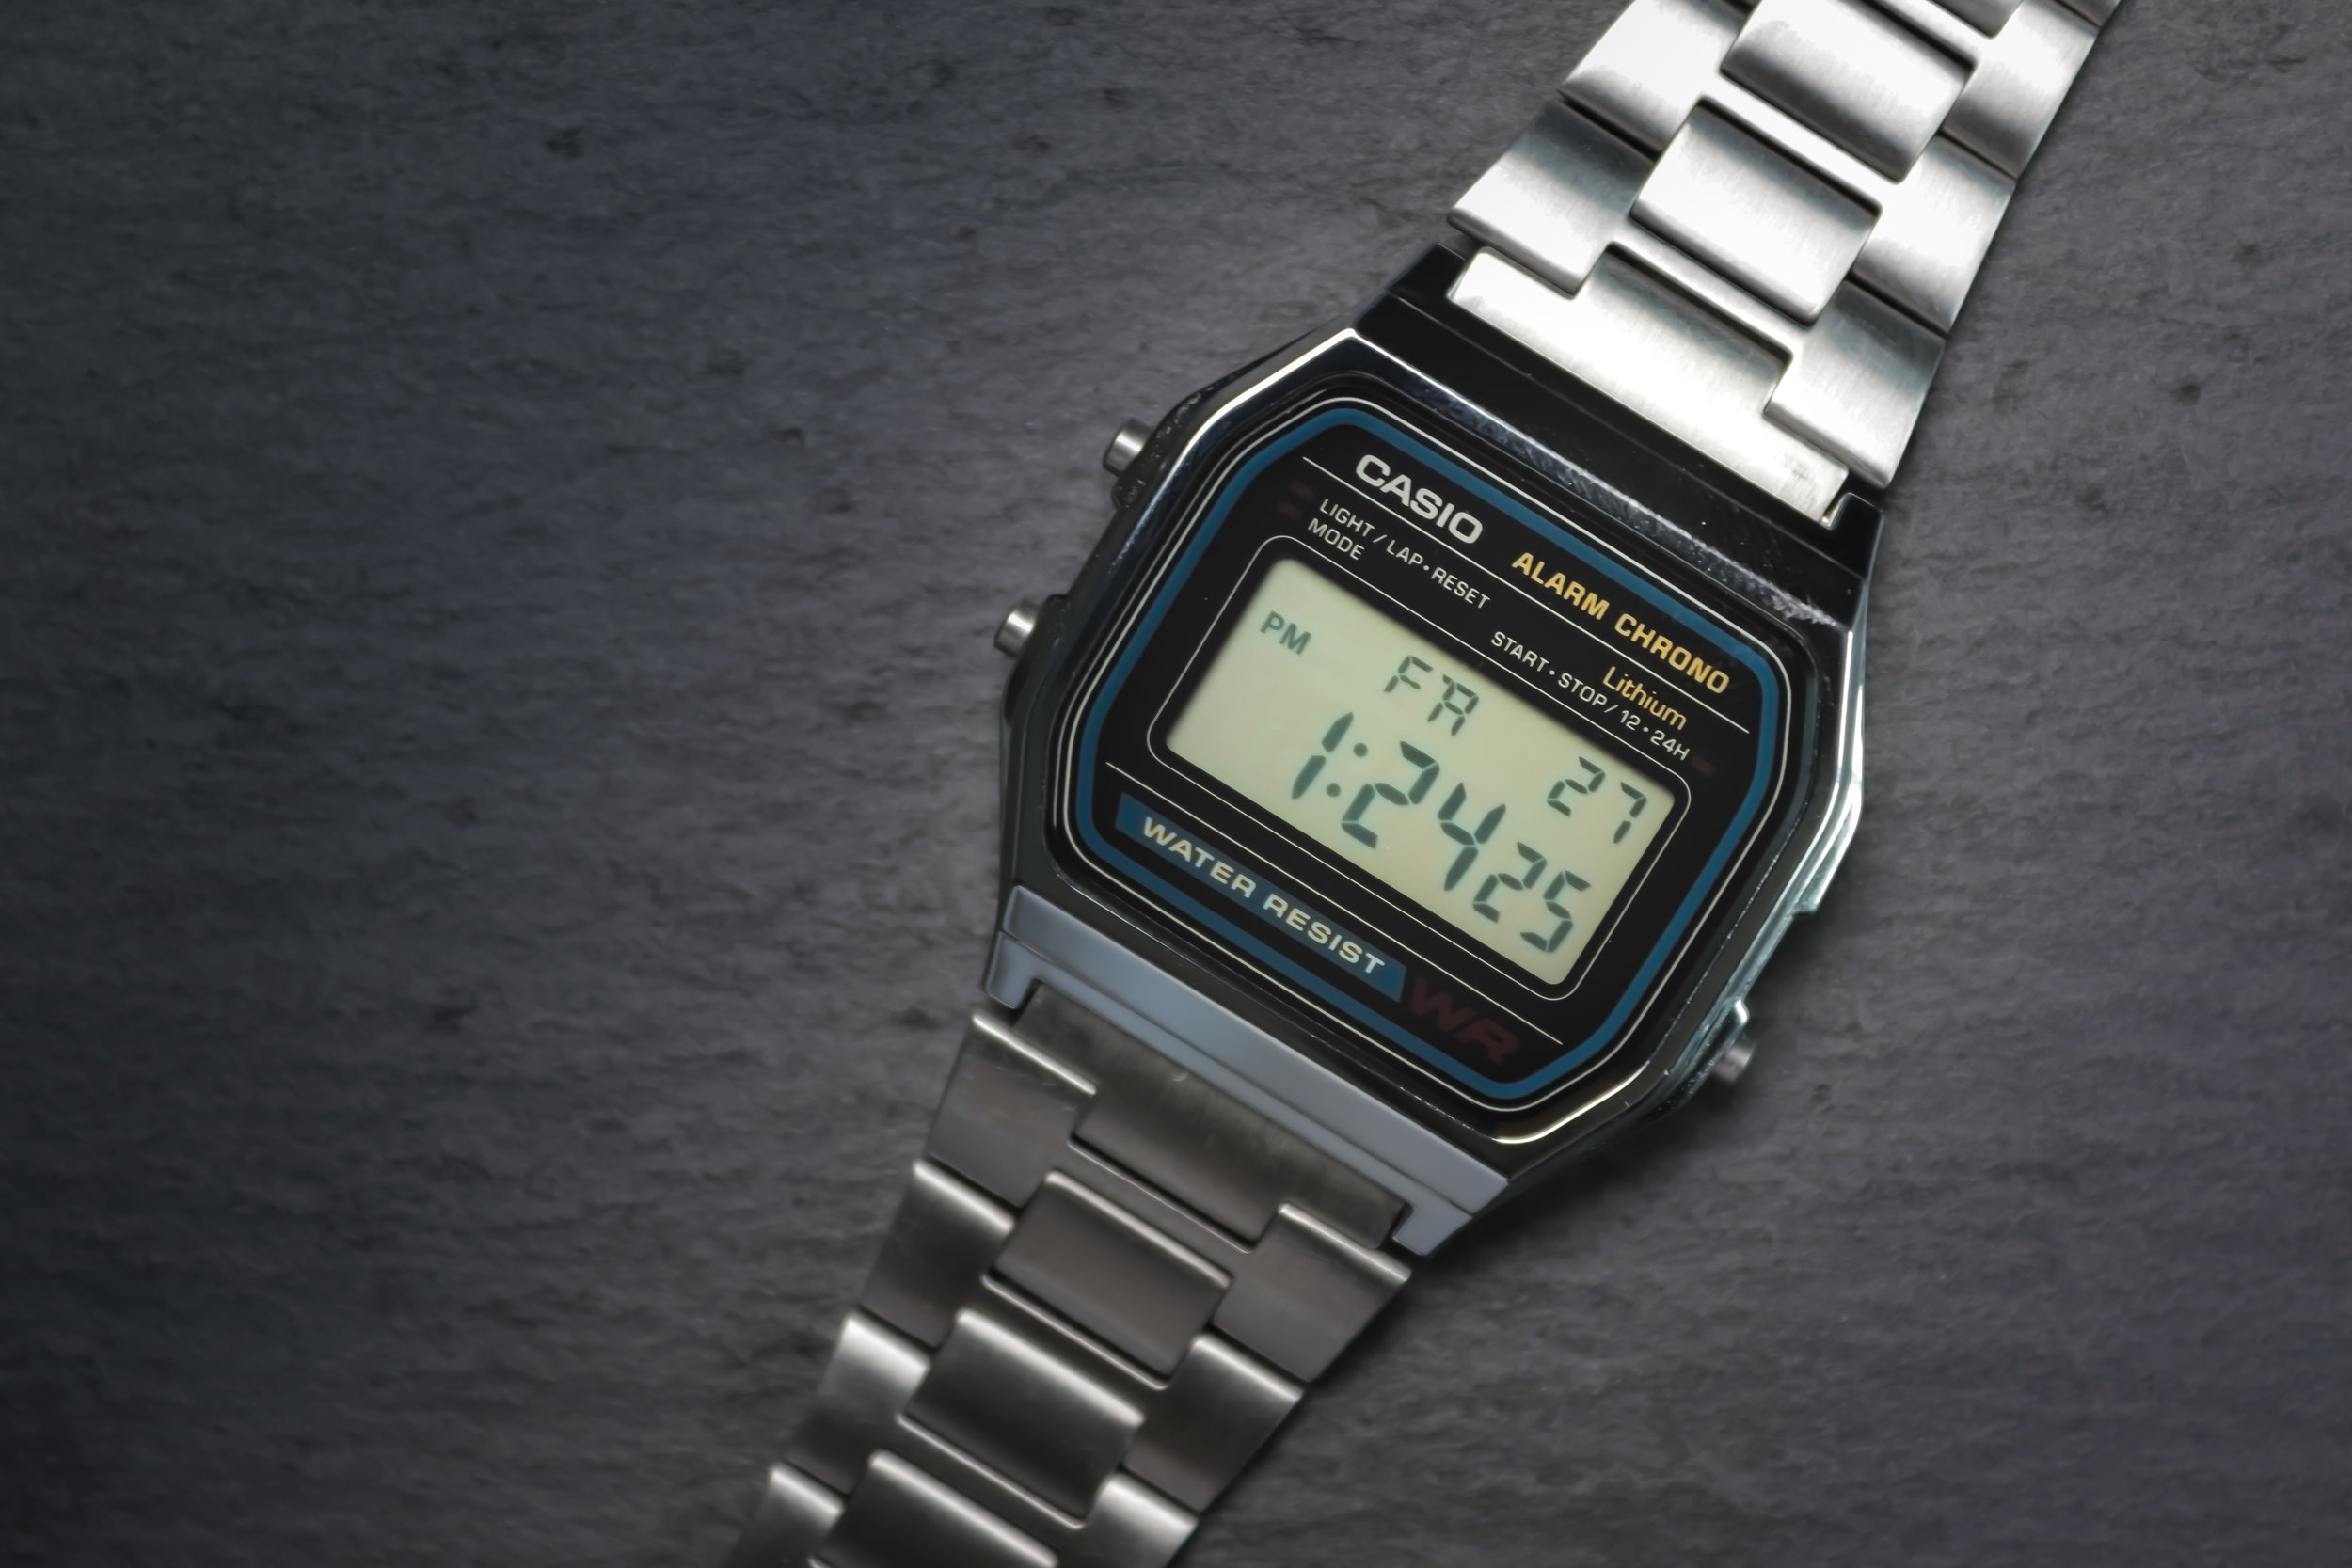  Casio A158W Review Best Cheap Digital Watch For Men Ben s Watch Club